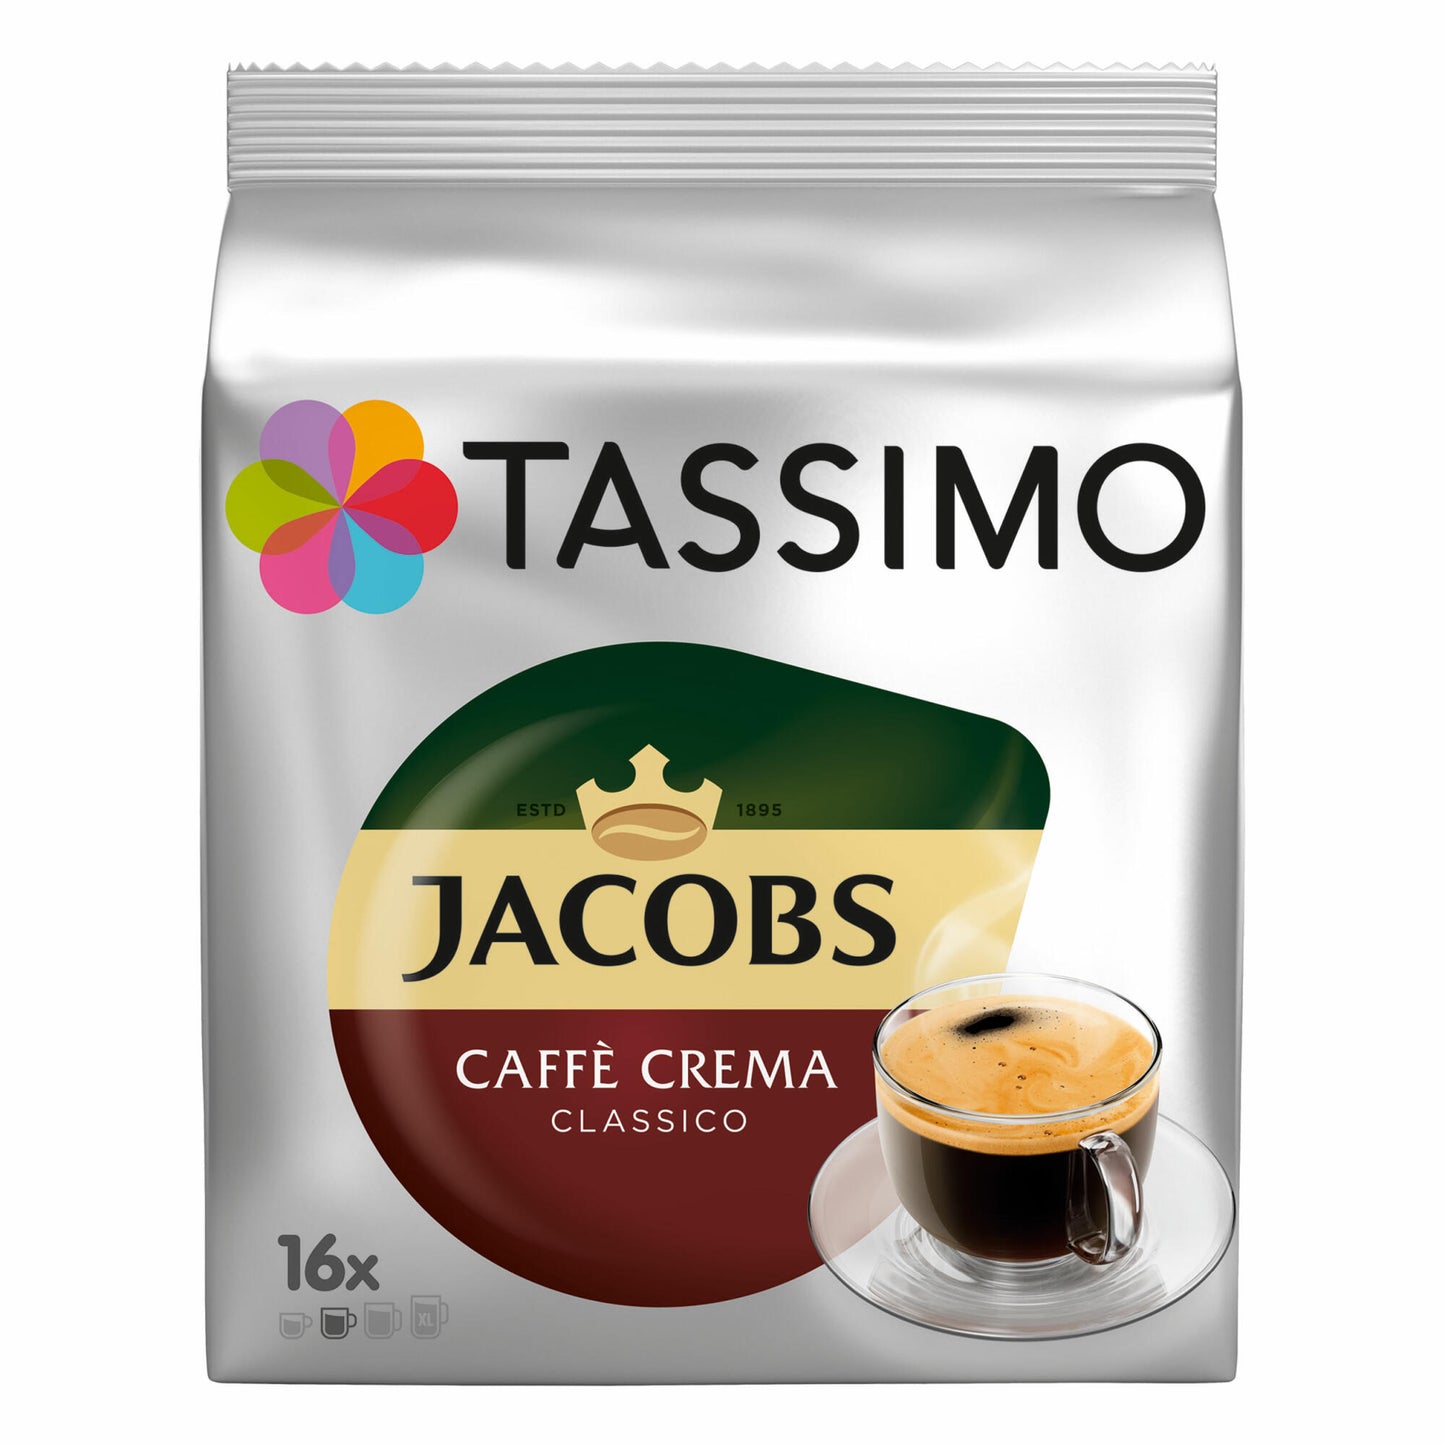 Tassimo Jacobs Caffè Crema Classico, Kaffee mit feiner Crema, 16 T-Discs